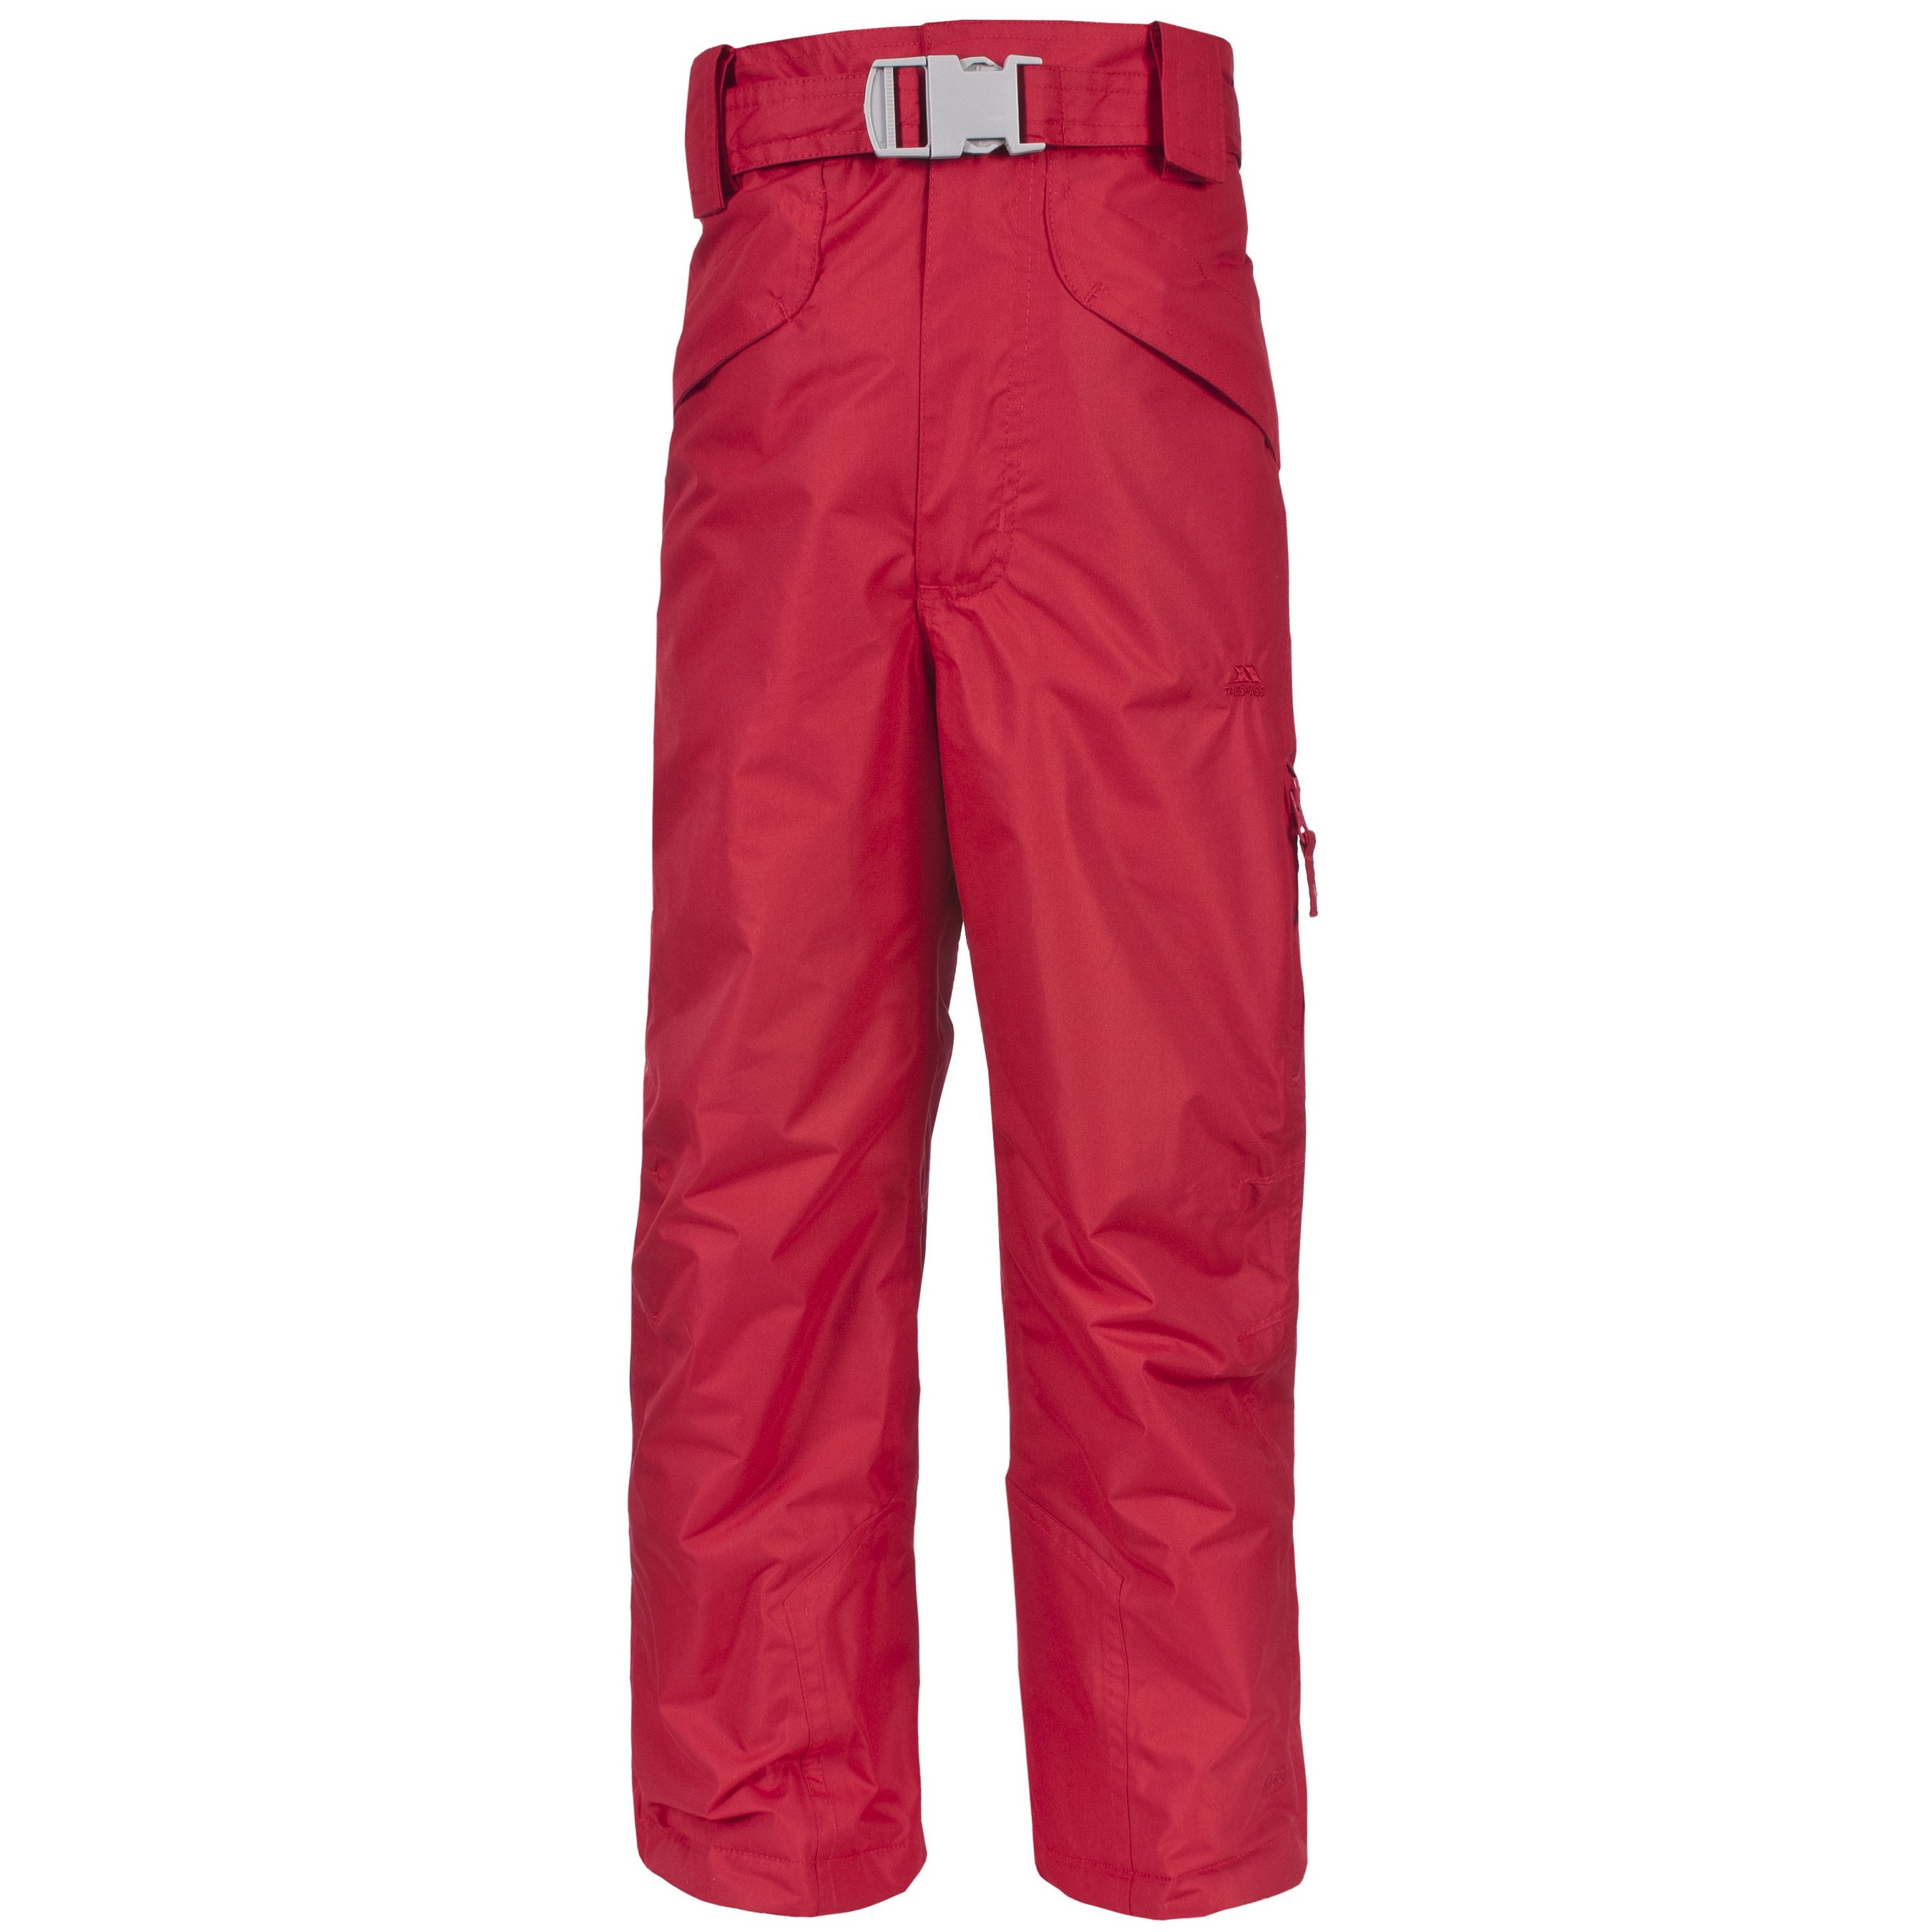 Pantalones De Esquí Impermeables Acolchados Con Tirantes Desmontables - rojo - 